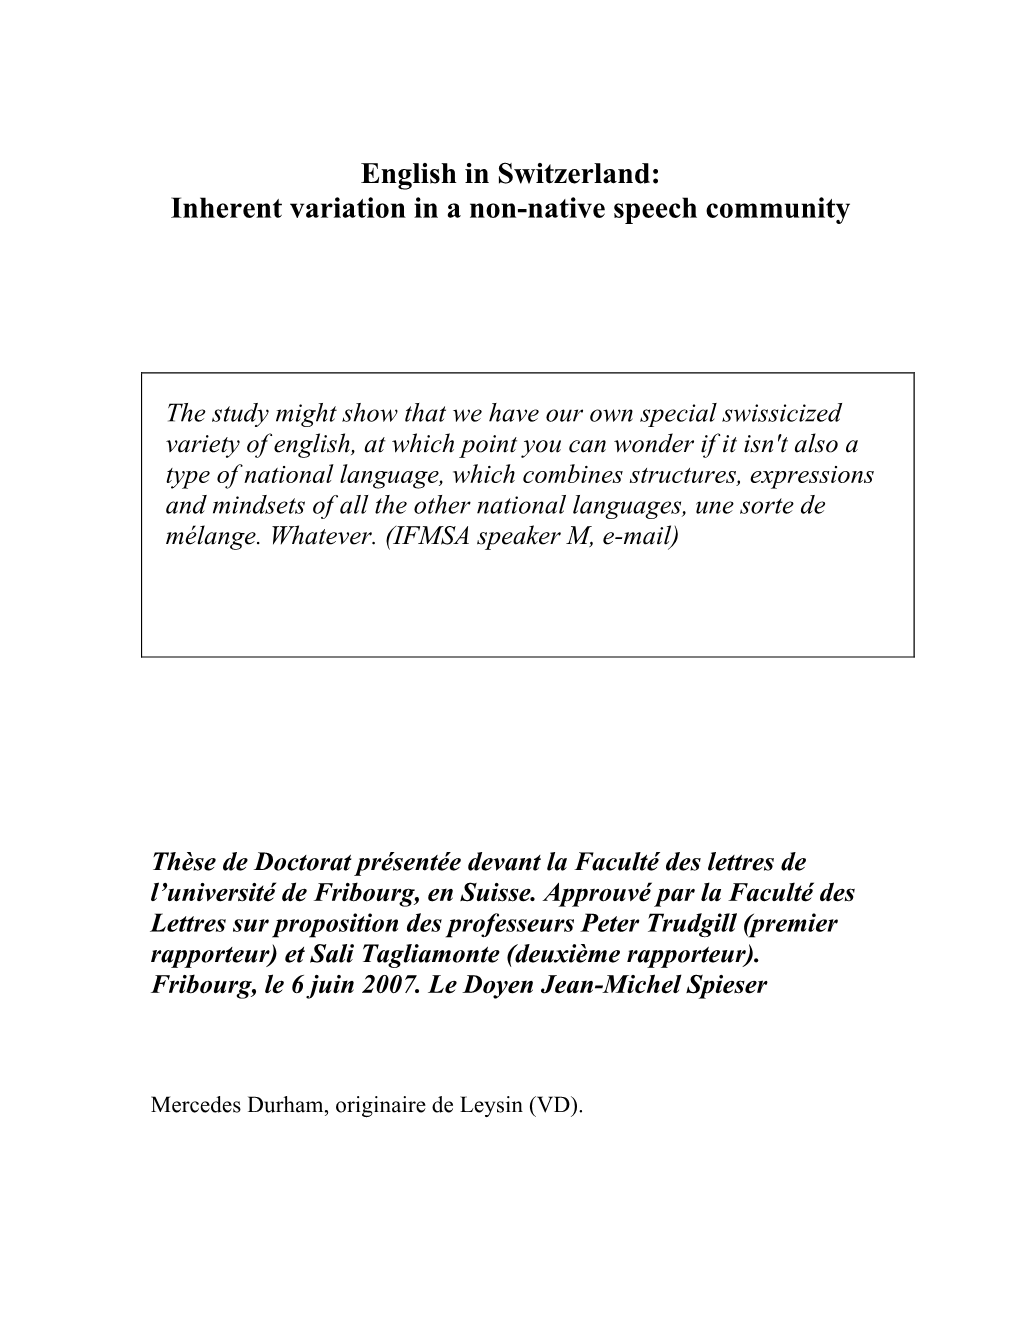 English in Switzerland: Inherent Variation in a Non-Native Speech Community